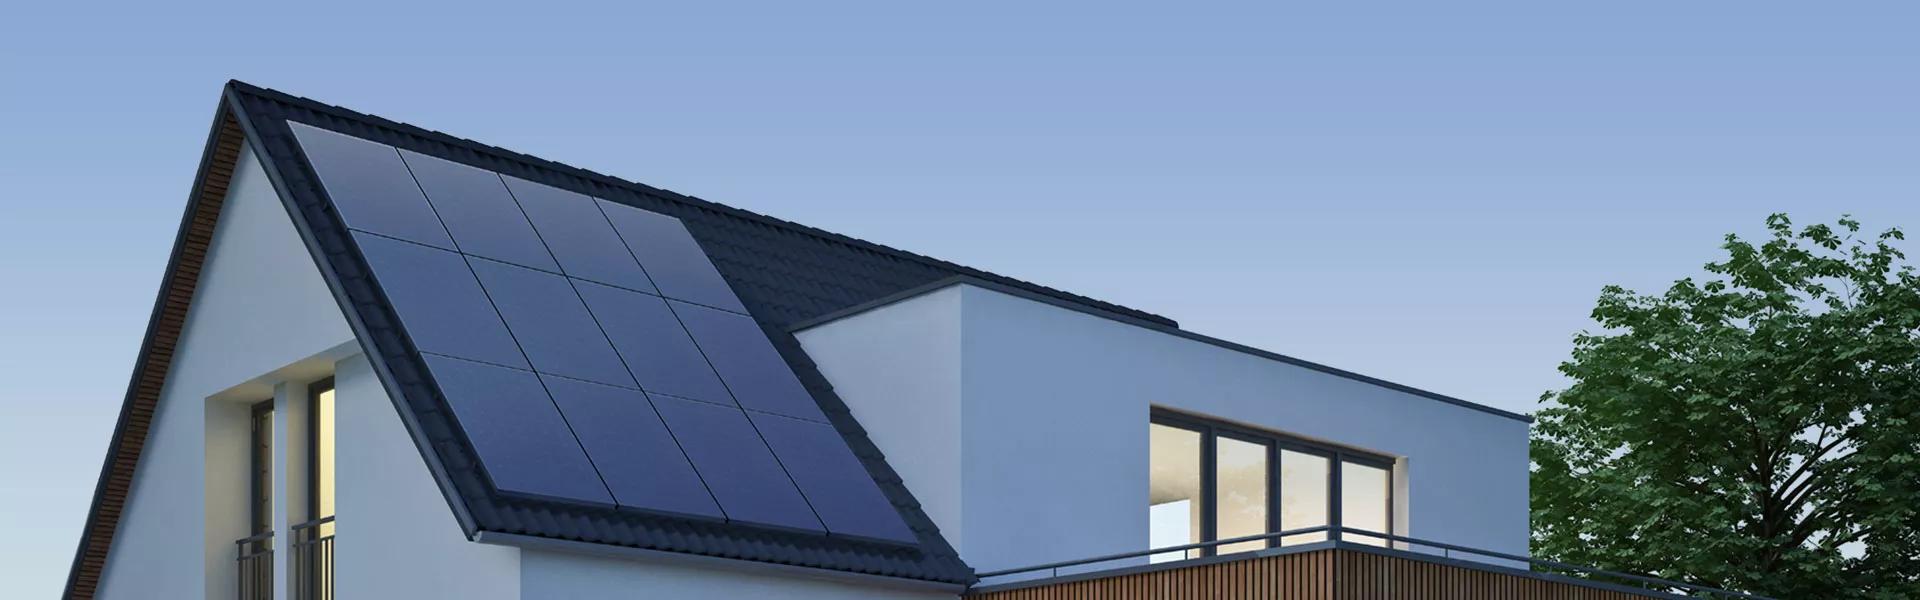 maxeon solar panels - Is Maxeon and SunPower the same